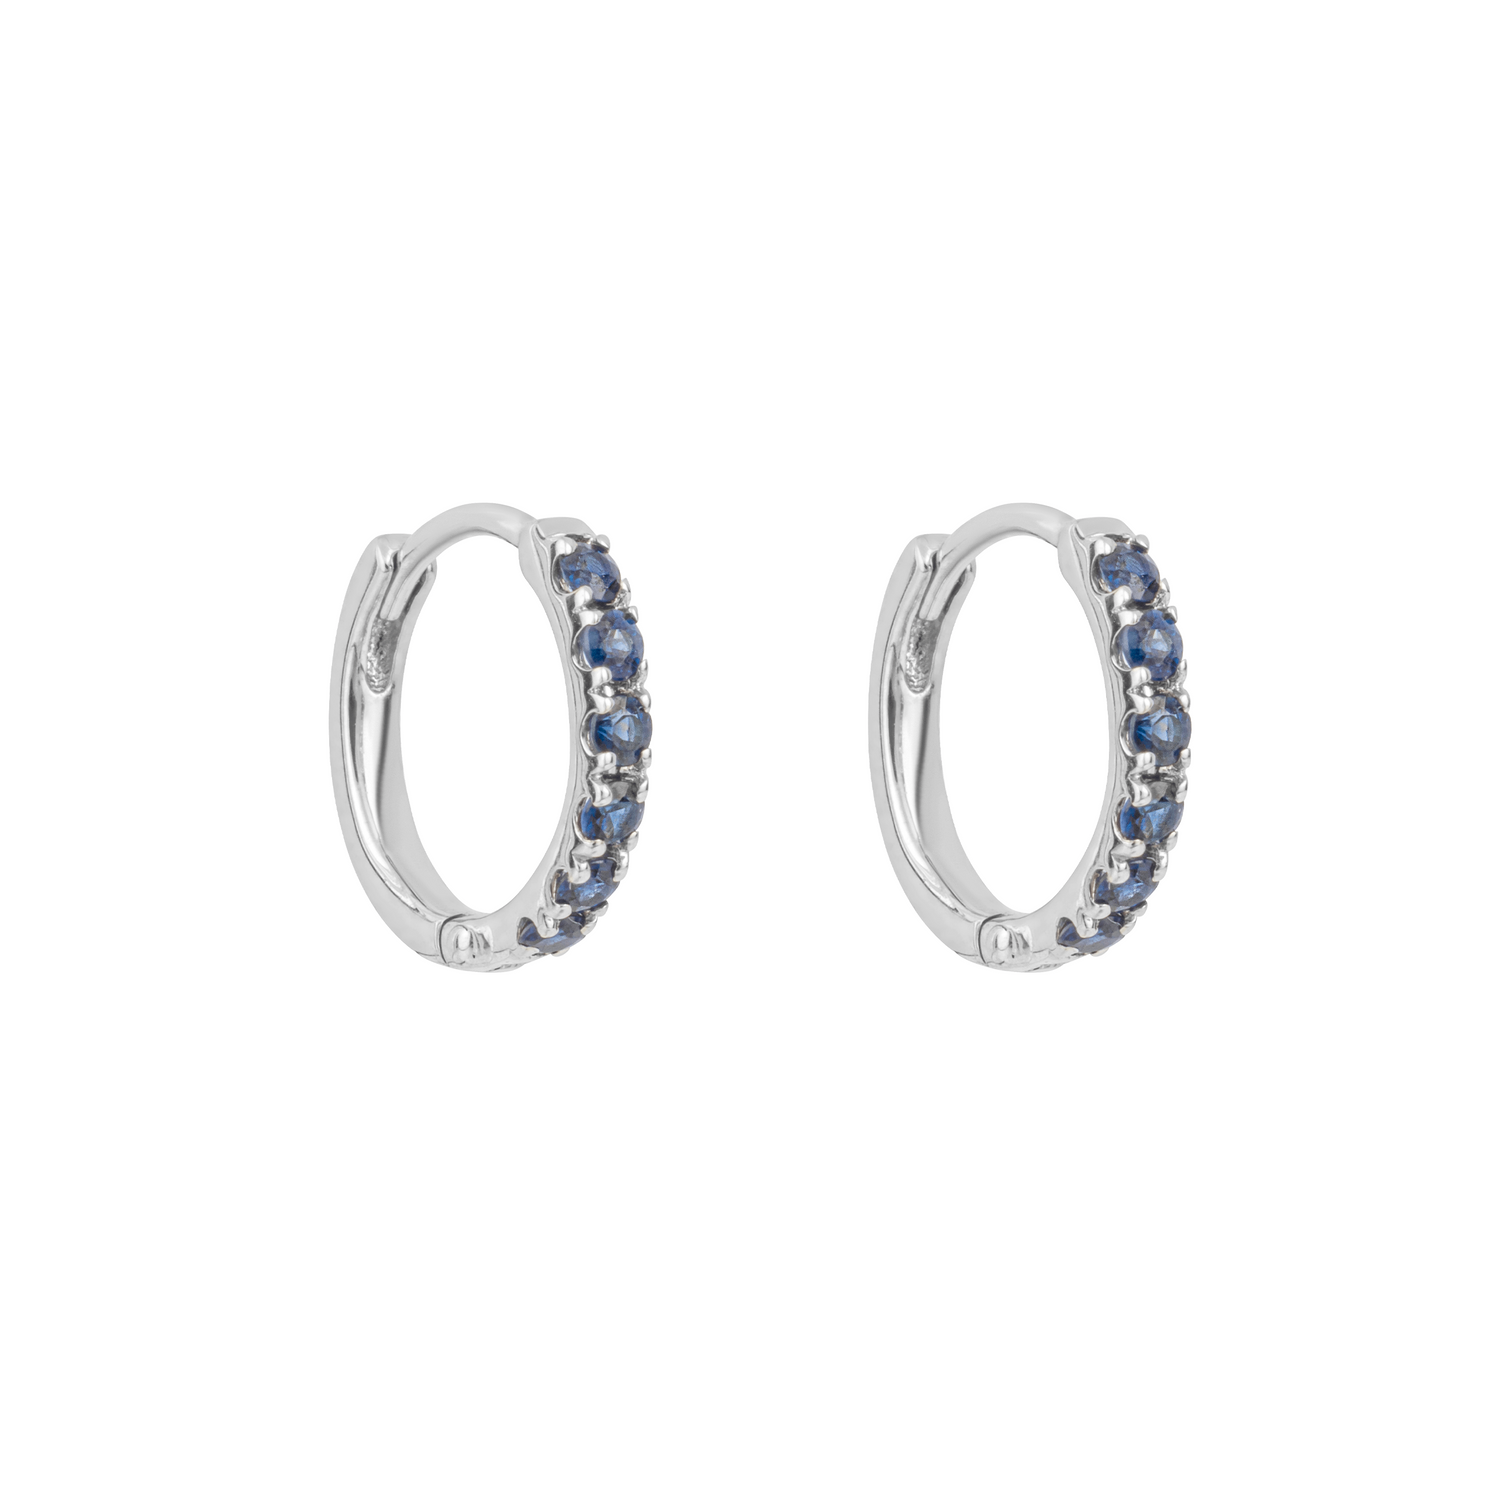 Blue Sapphire Hoop Earrings in 9ct White Gold - Robert Anthony Jewellers, Edinburgh